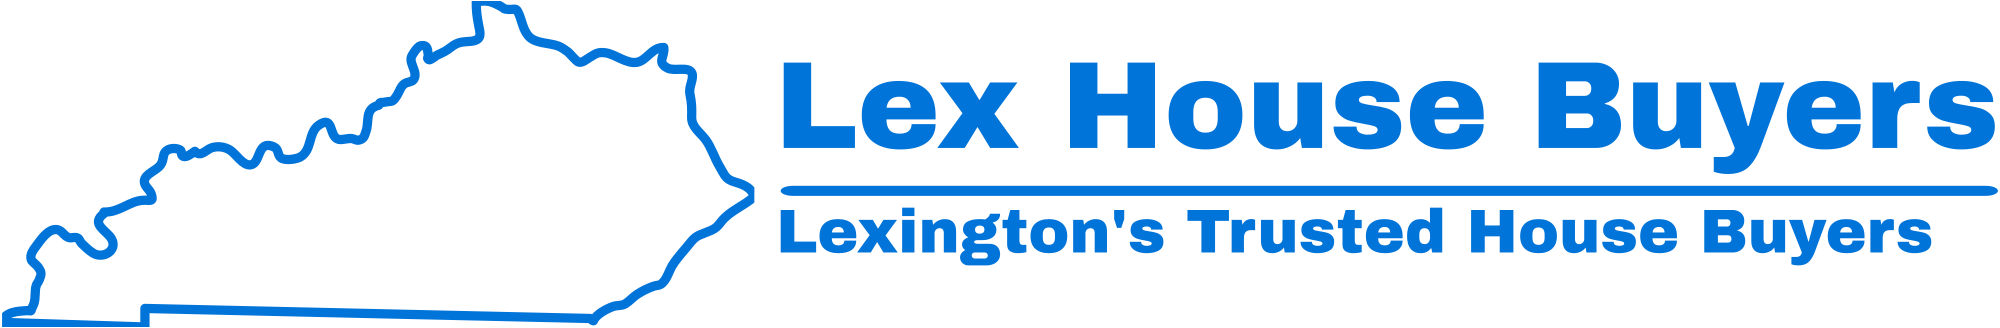 Lex House Buyers logo